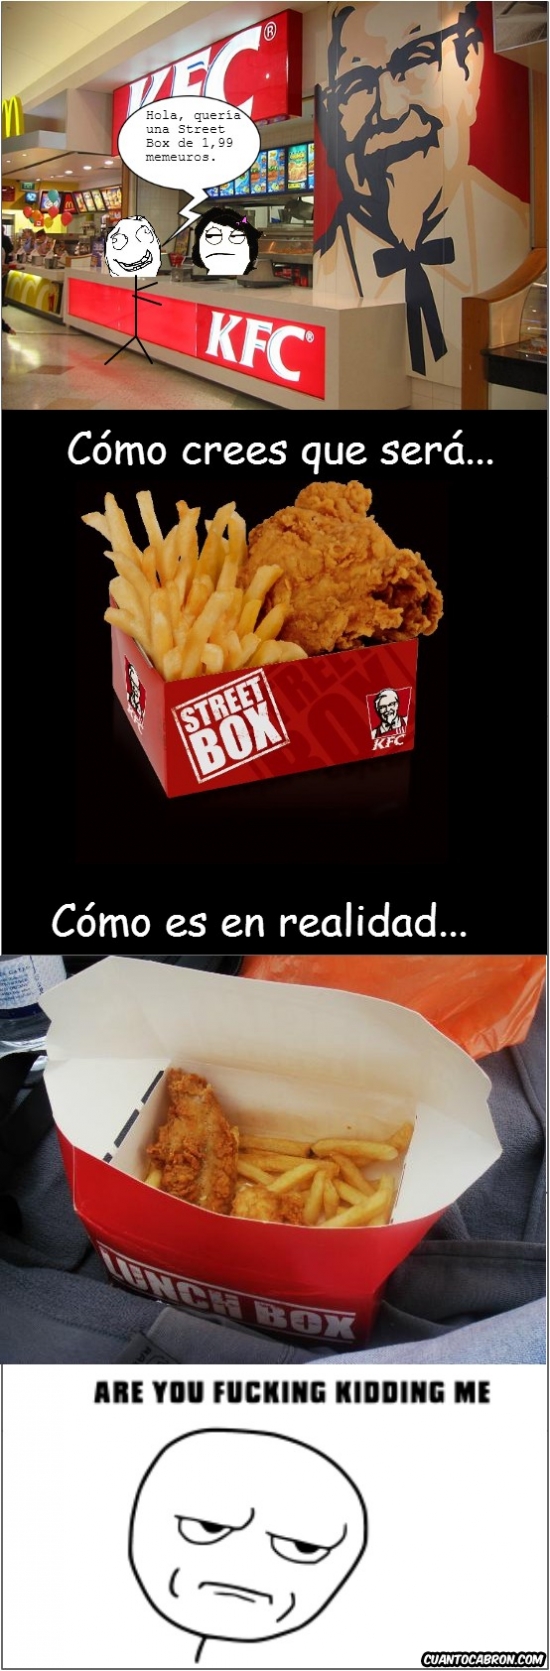 Are you fucking kidding me,kentucky fried chicken,KFC,meme,street box,timo,¿2 euros para esto?